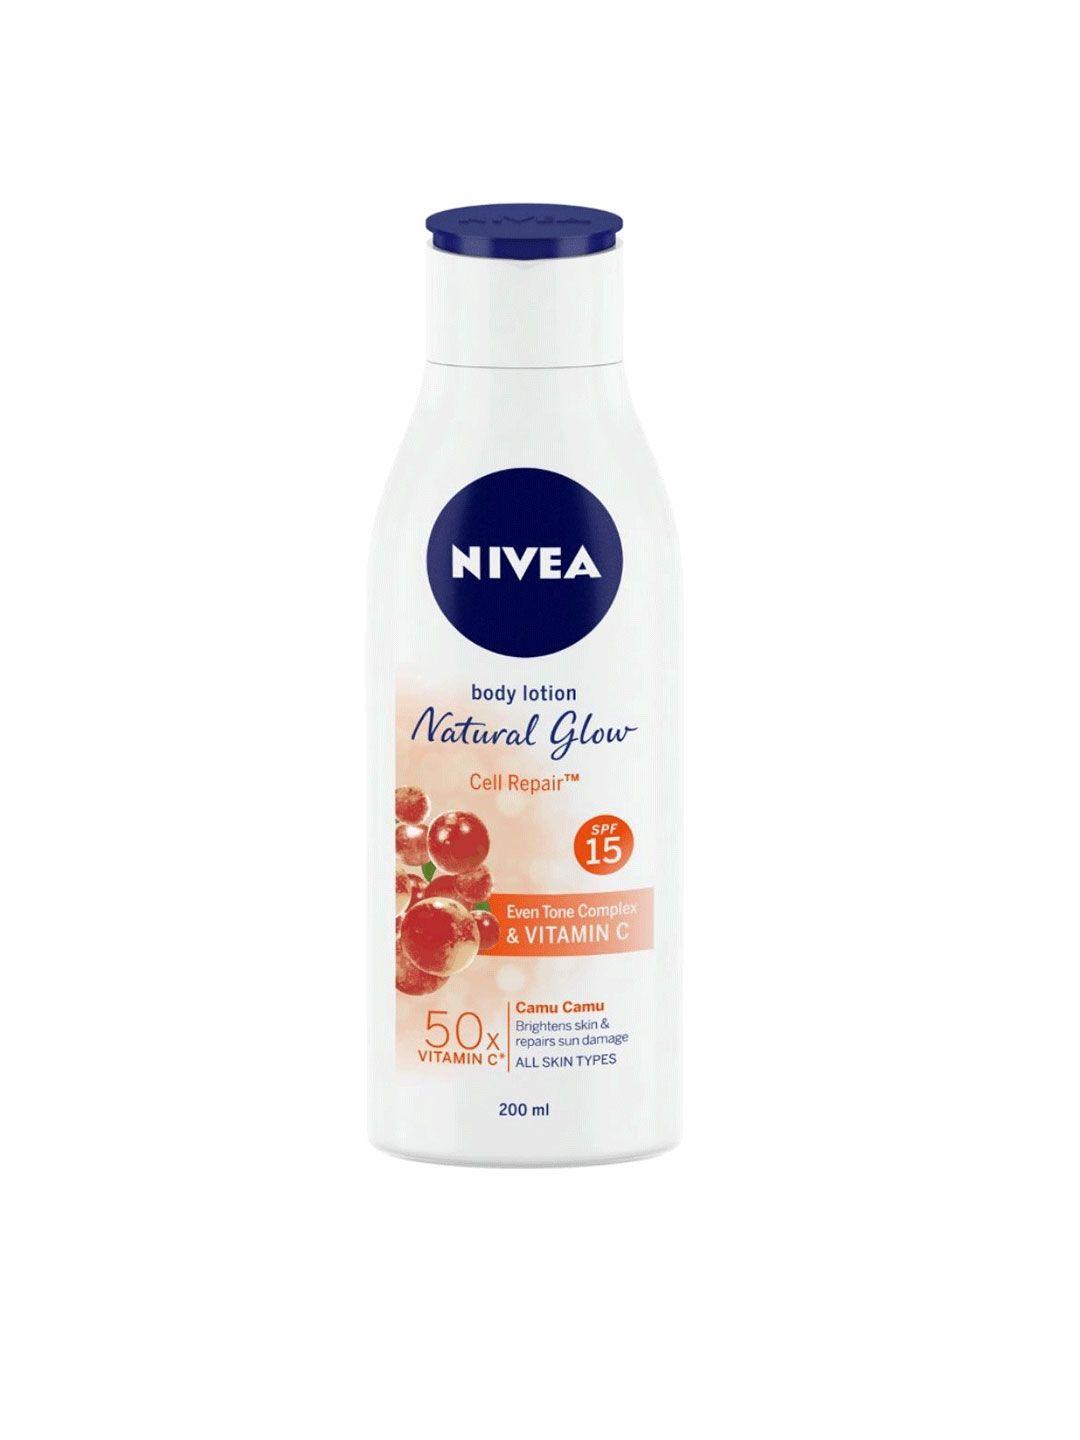 nivea body lotion spf 15 natural glow cell repair 50x vitamin c - 200 ml